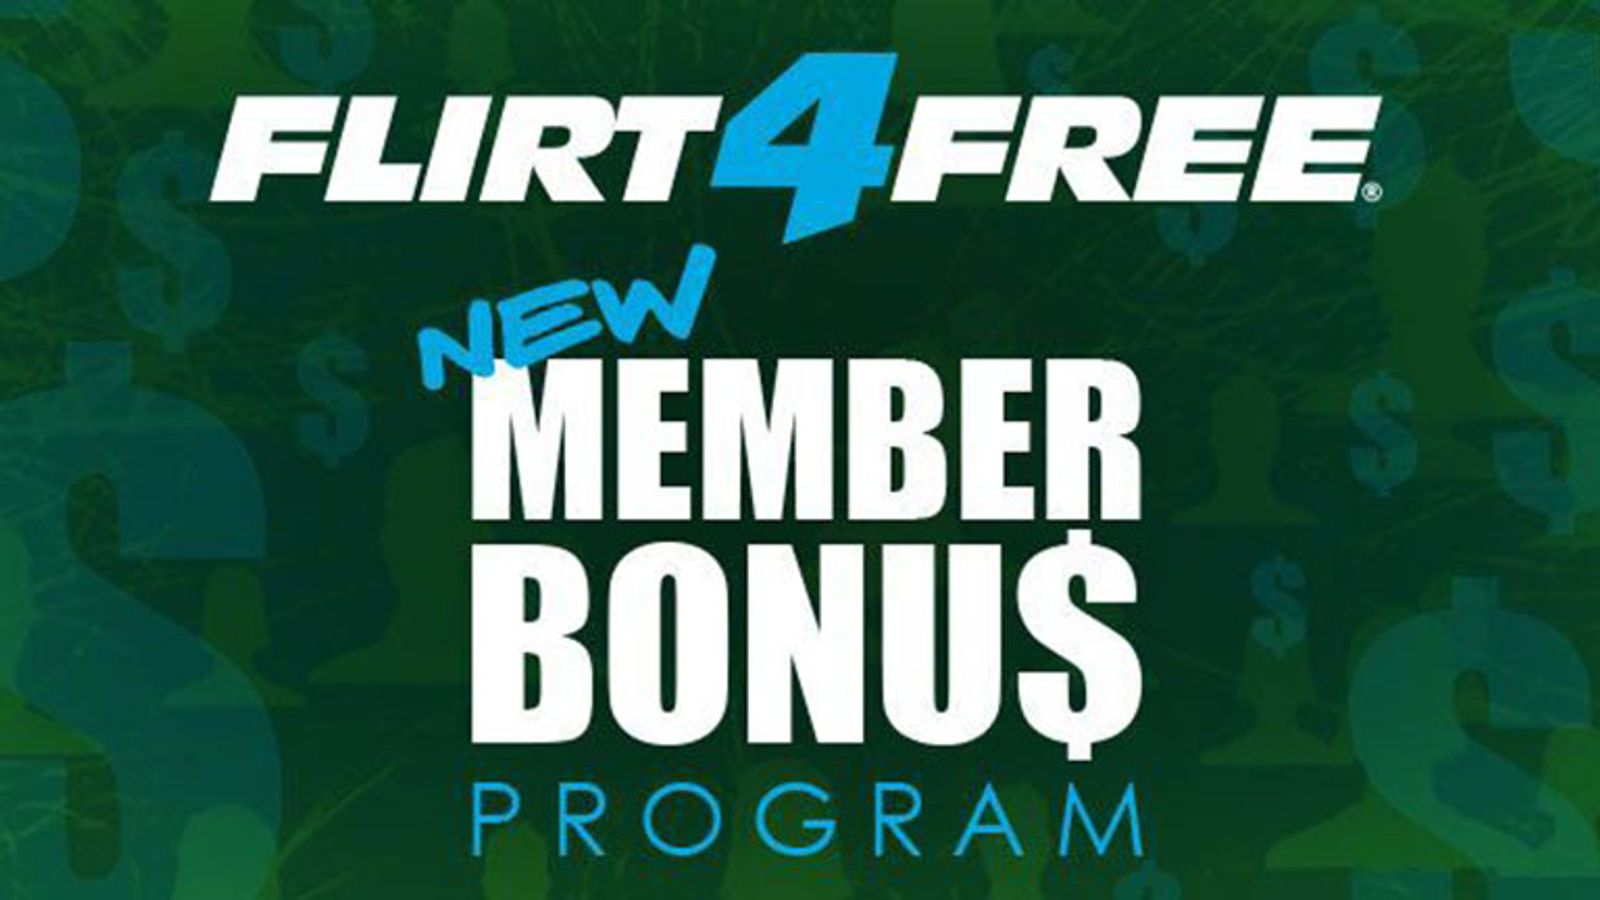 Flirt4Free Launches 100% Bonus Credits Program for Models